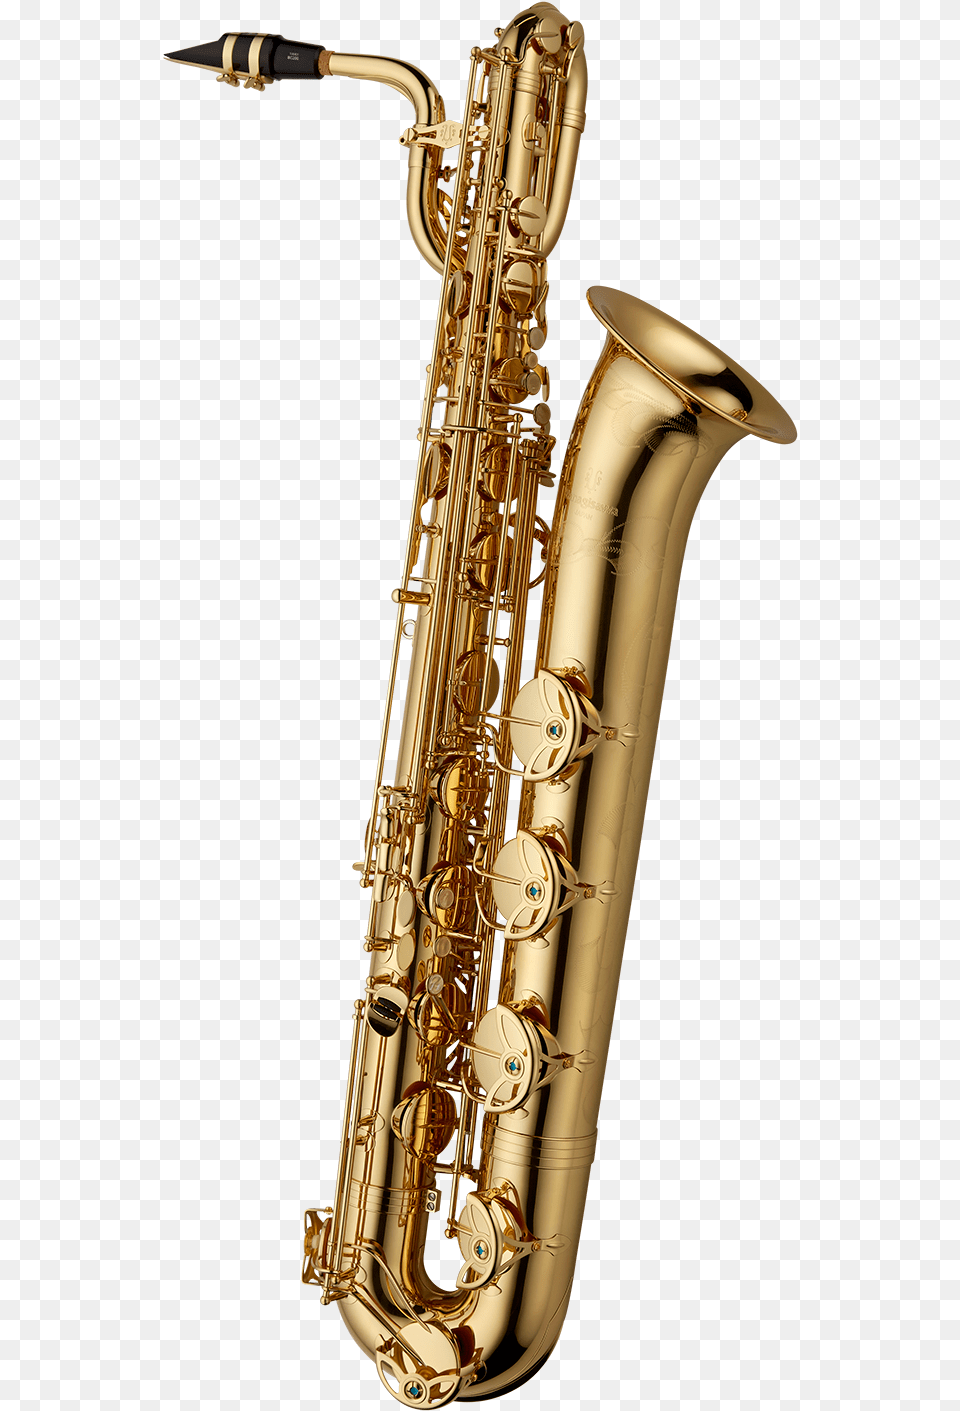 Yanagisawa Bwo Professional Wo Series Low A Bari Saxophone Baritone Saxophone Whats New For 2017, Musical Instrument Free Transparent Png